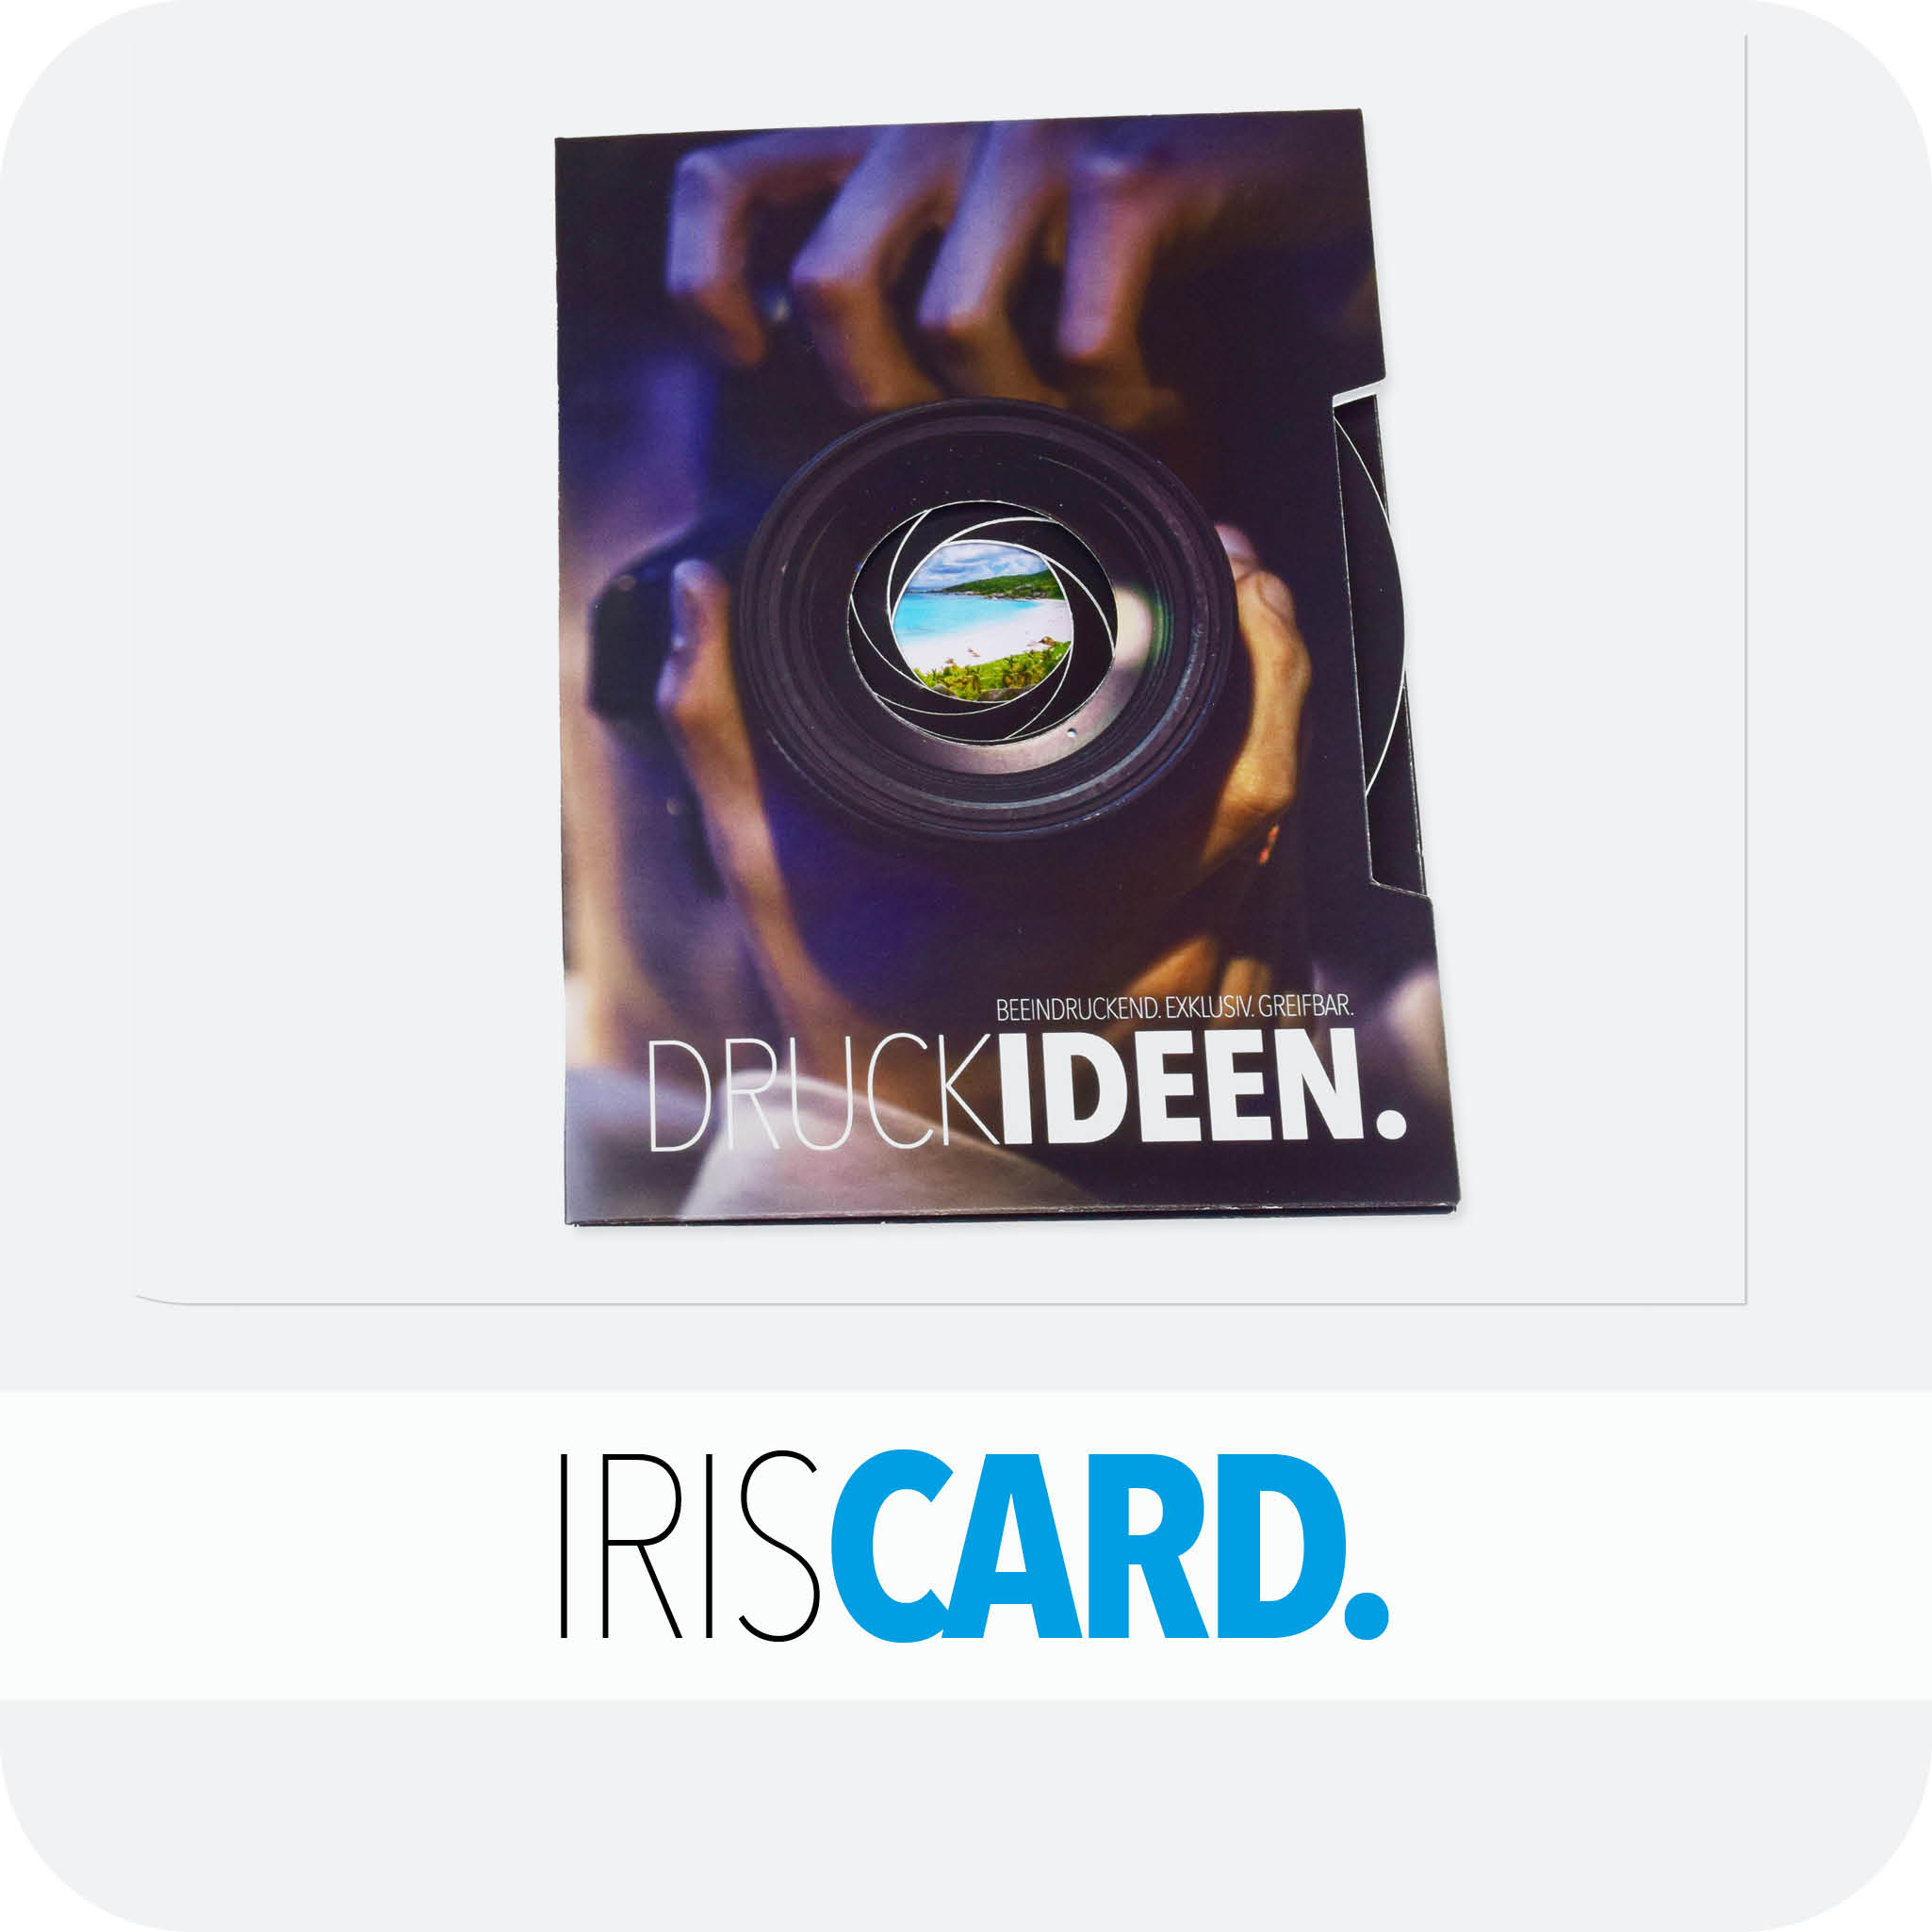 Iris card